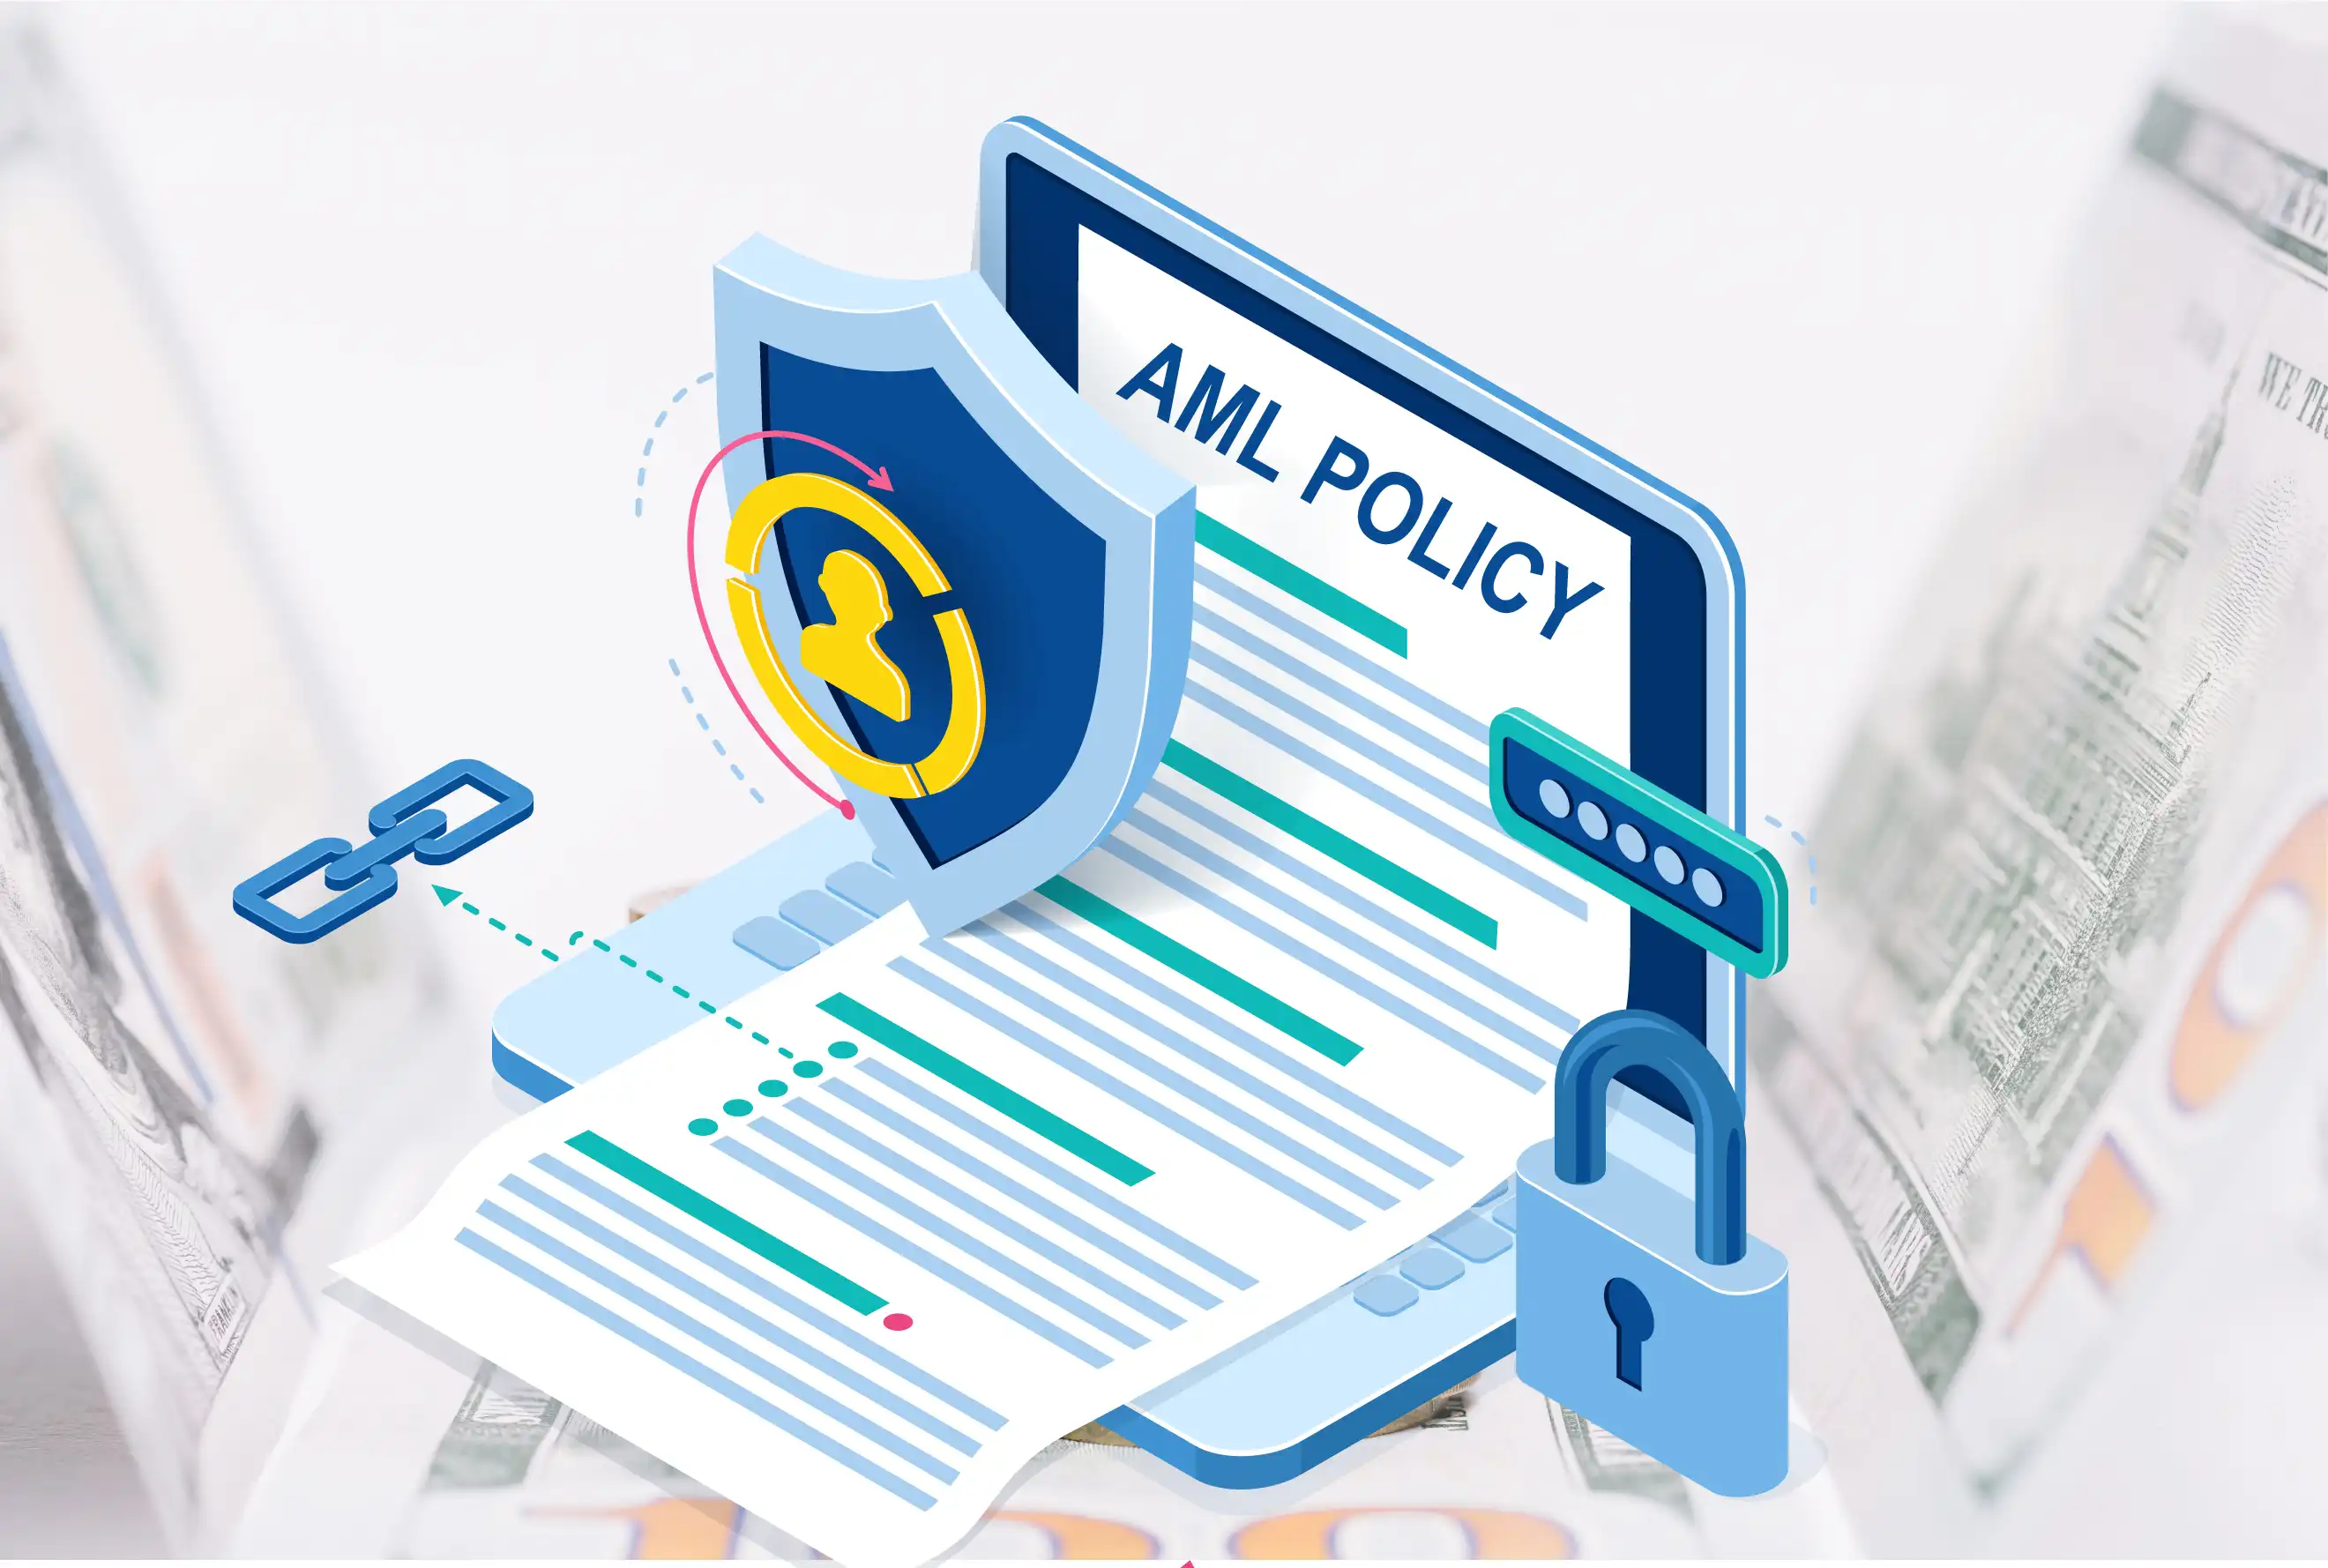 Develop AML compliance policies and procedures